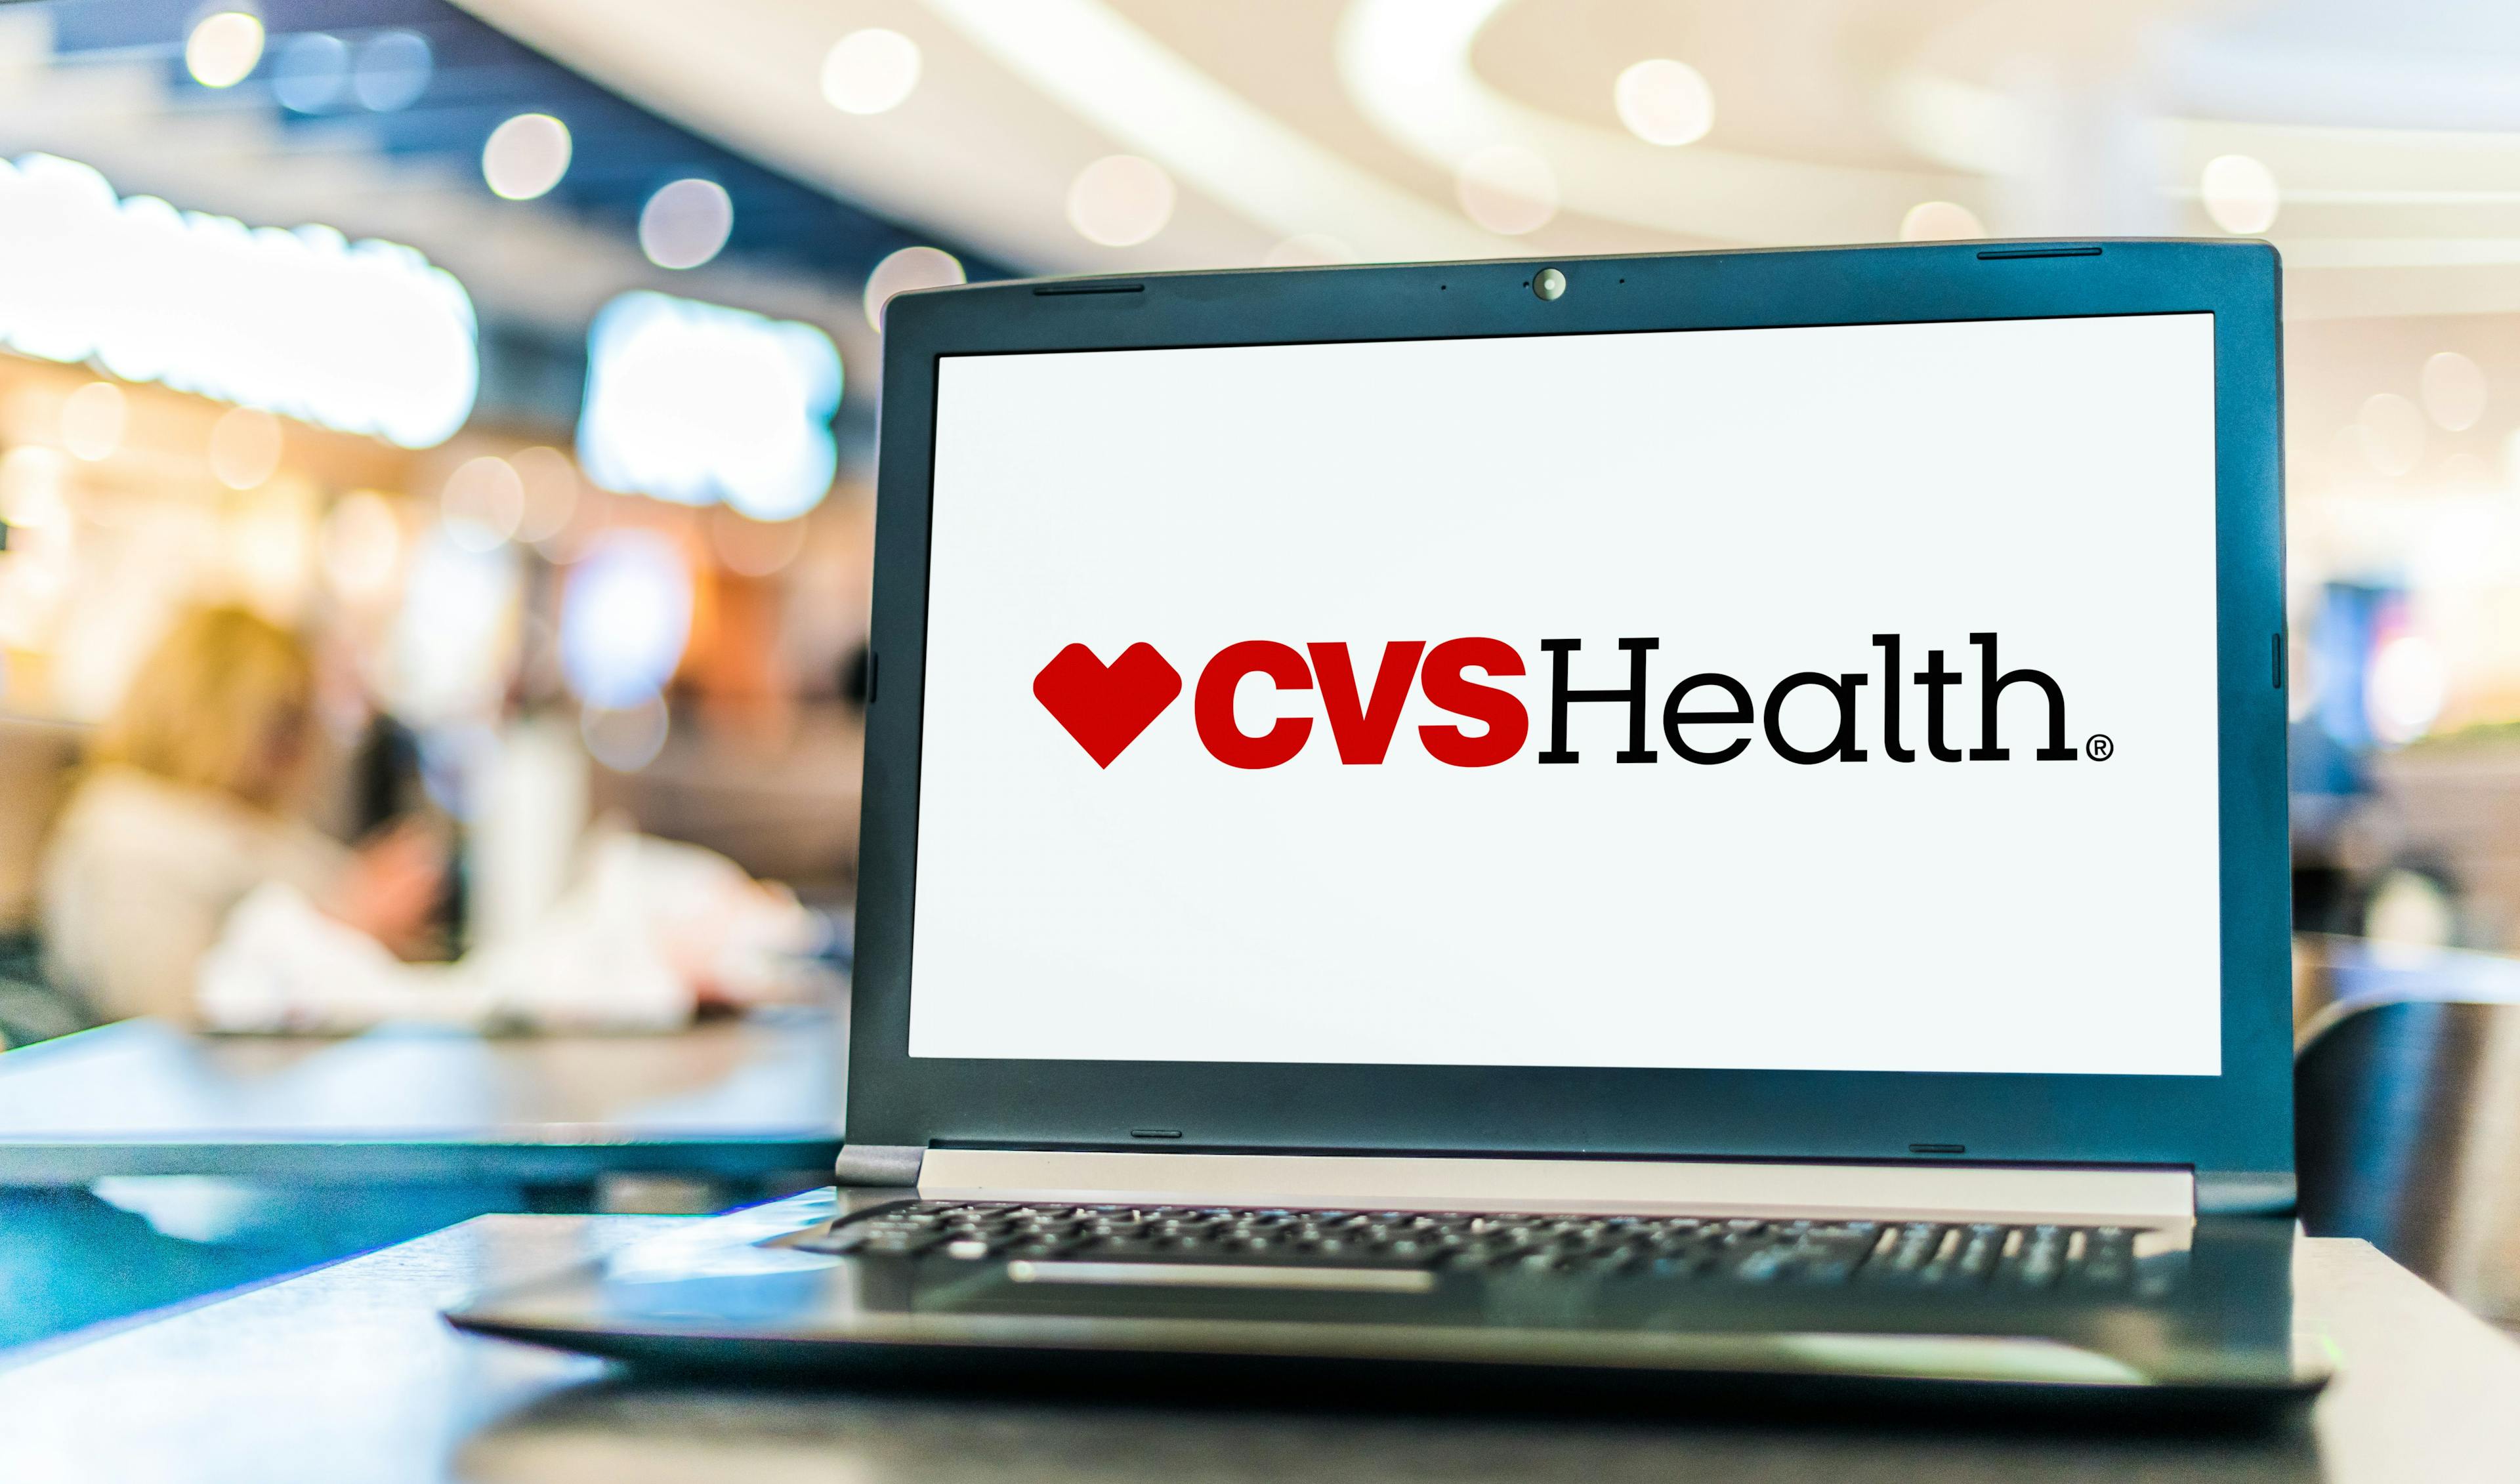 CVS health laptop | Image credit: monticellllo - stock.adobe.com